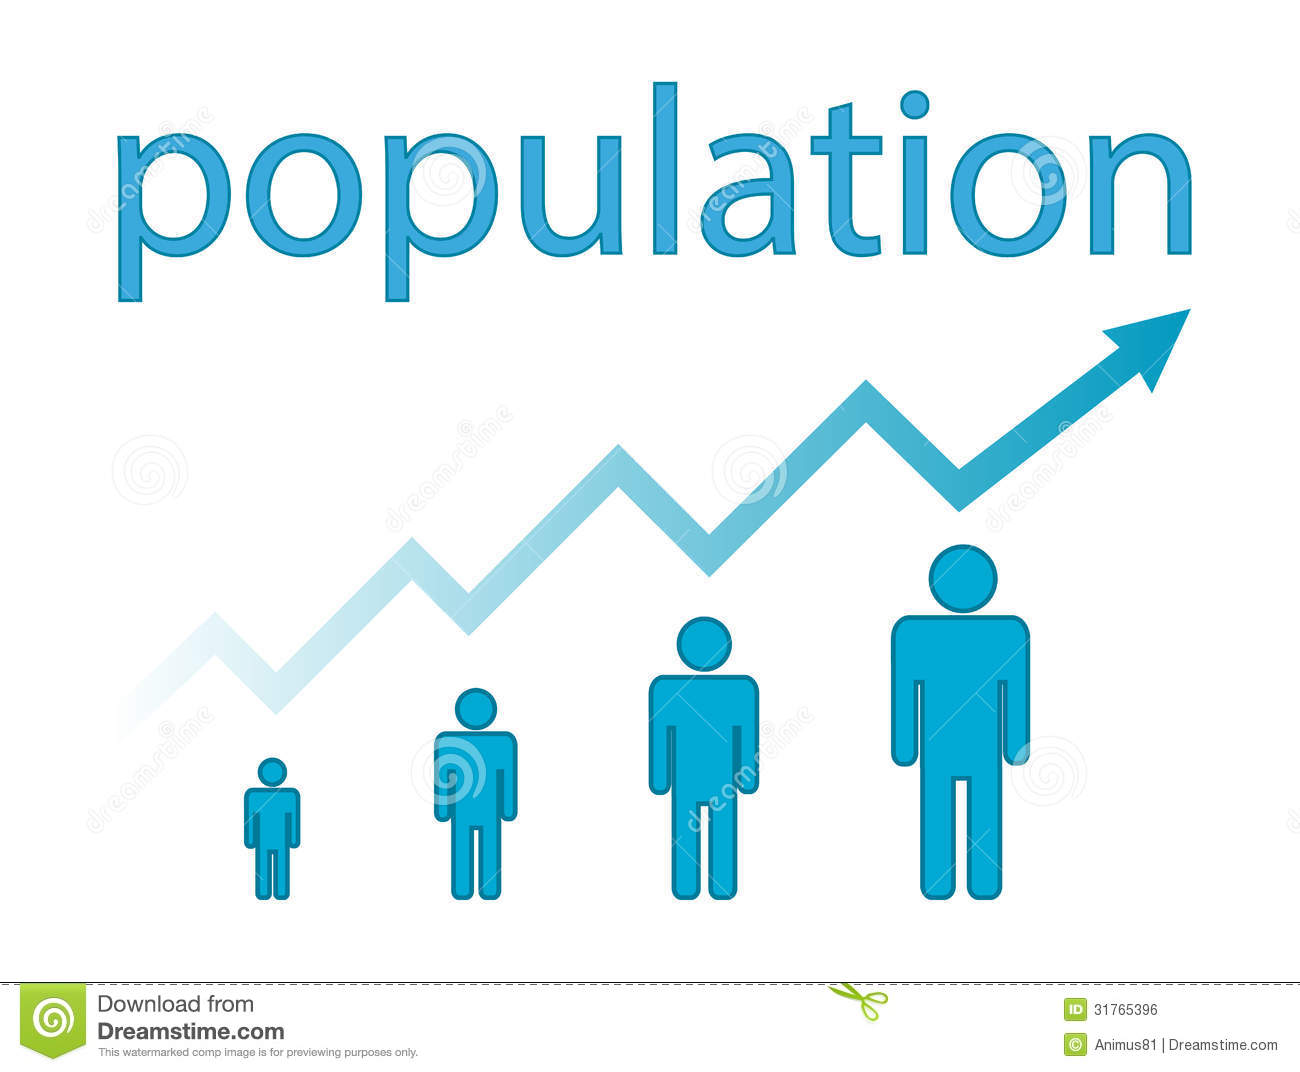 Population Royalty Free Stock Image   Image  31765396